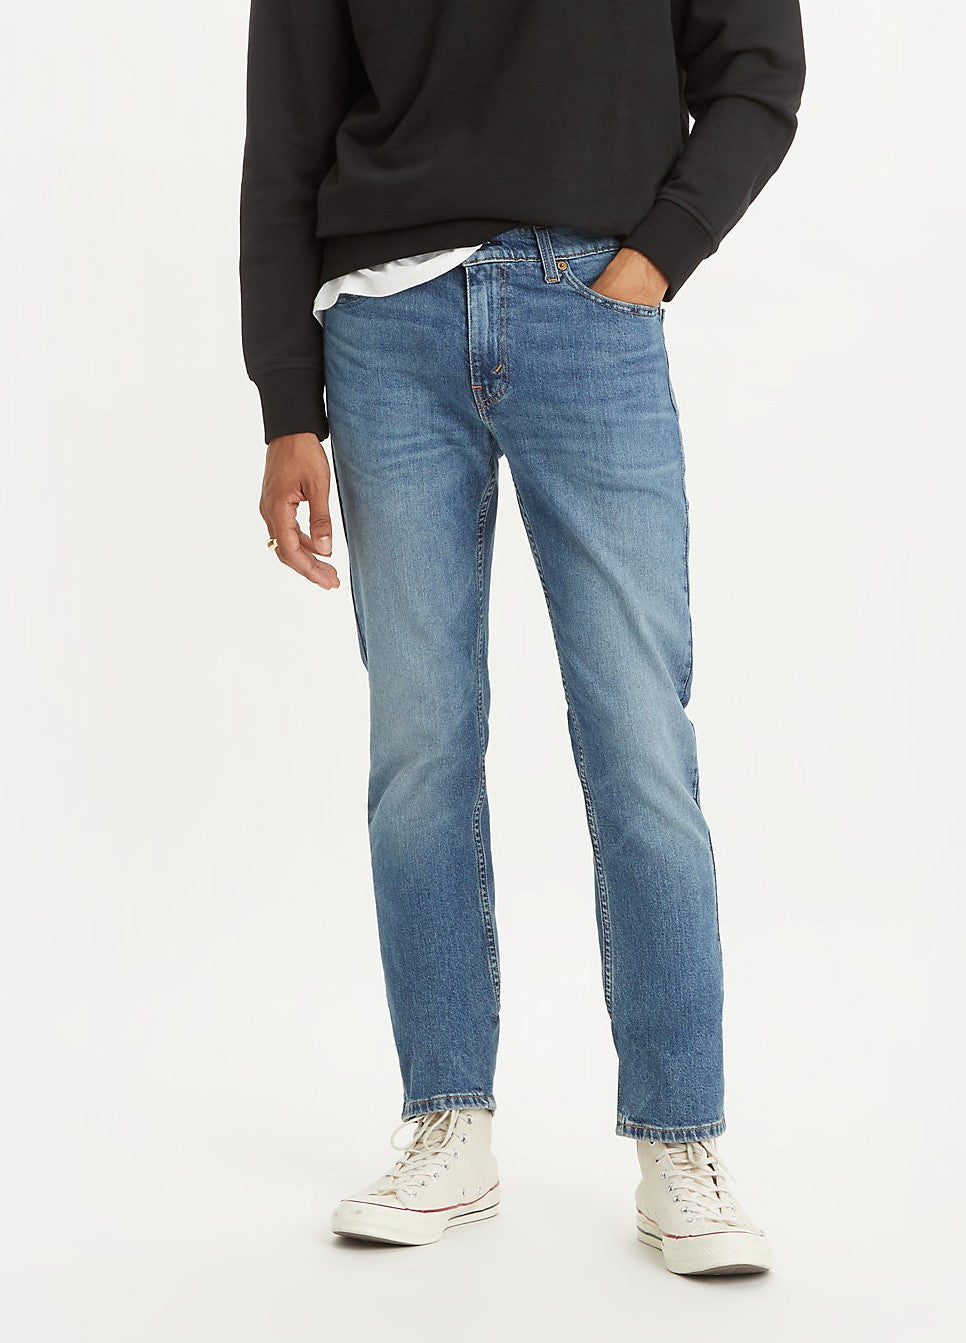 pantalones-jeans-levis-511-slim-p-caballeros-6